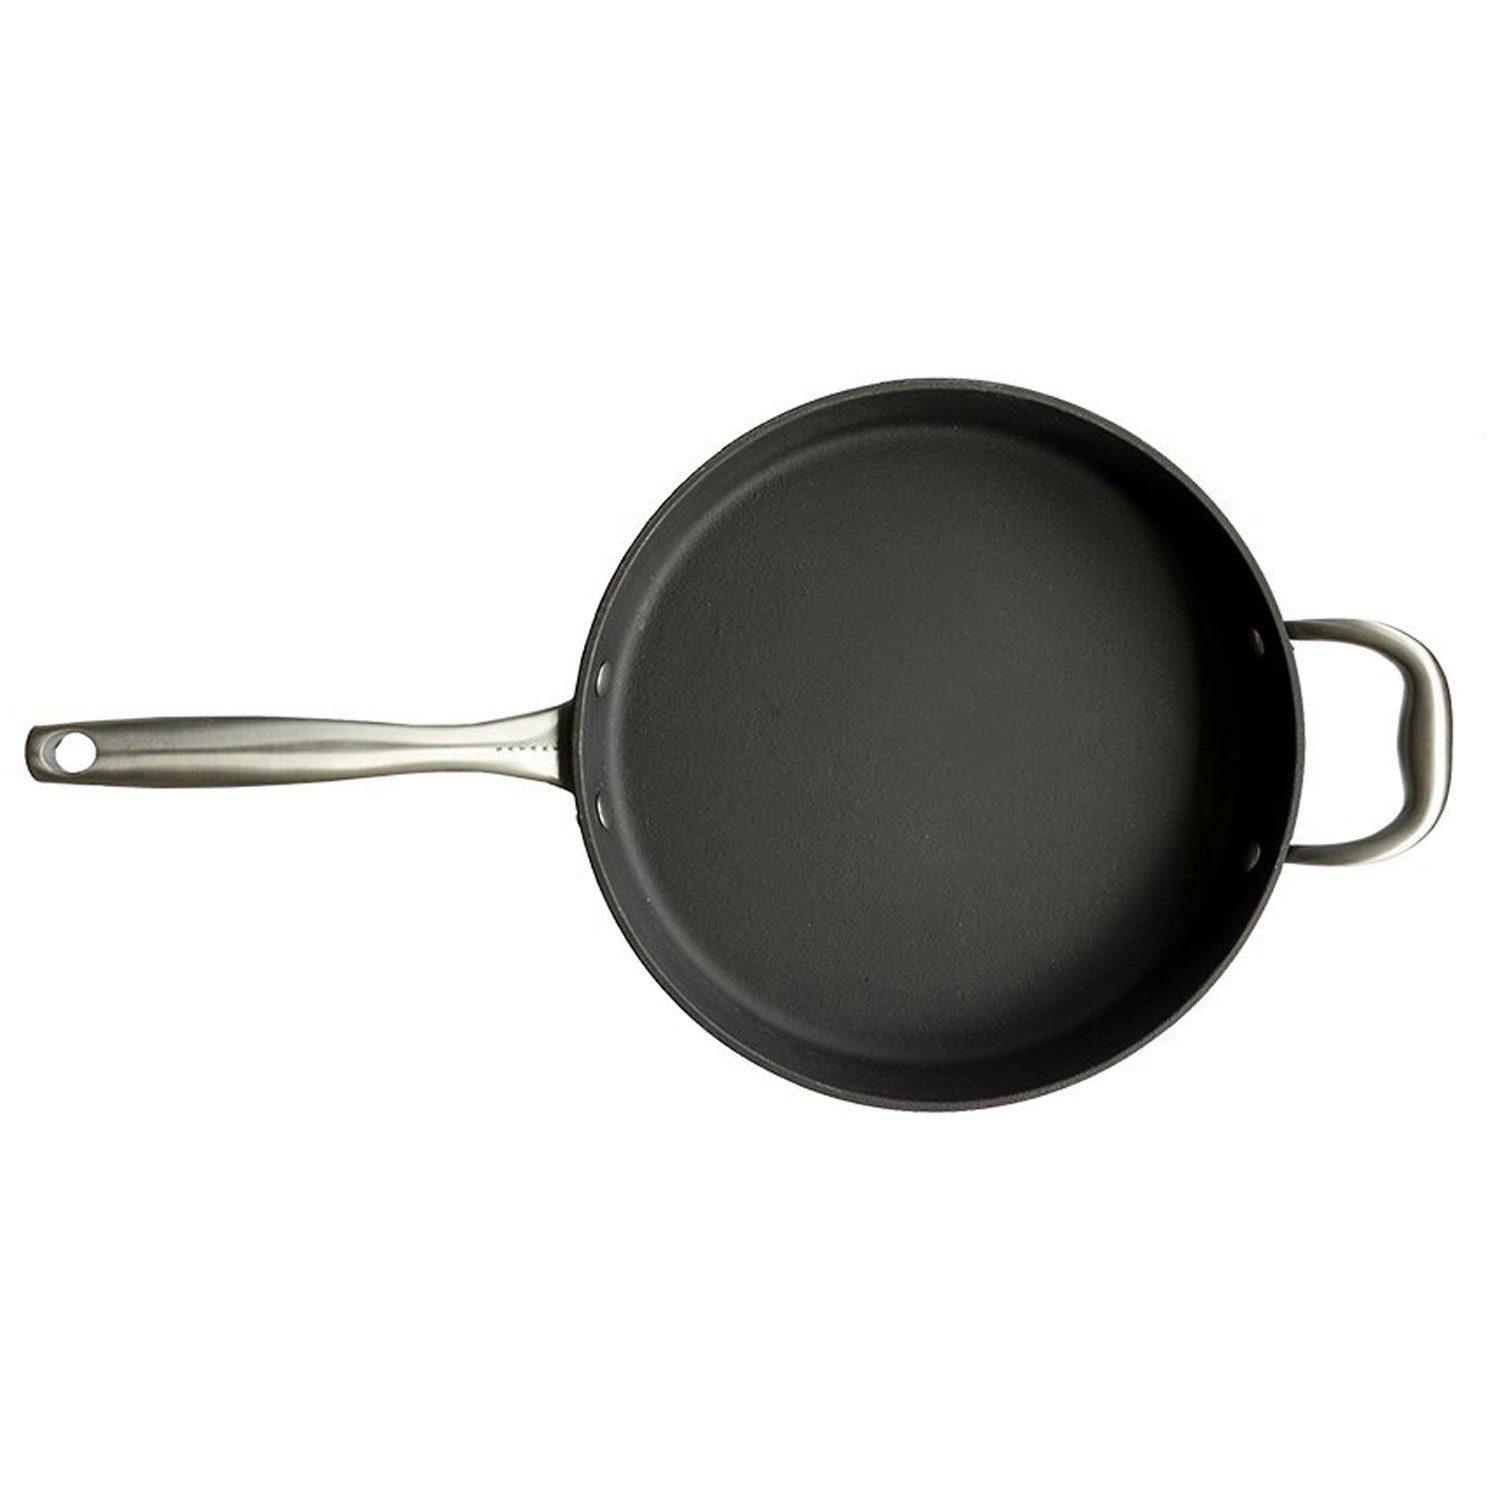 25 cm Dia. Cast Iron Frying Pan with Matte Black Enamel Coating